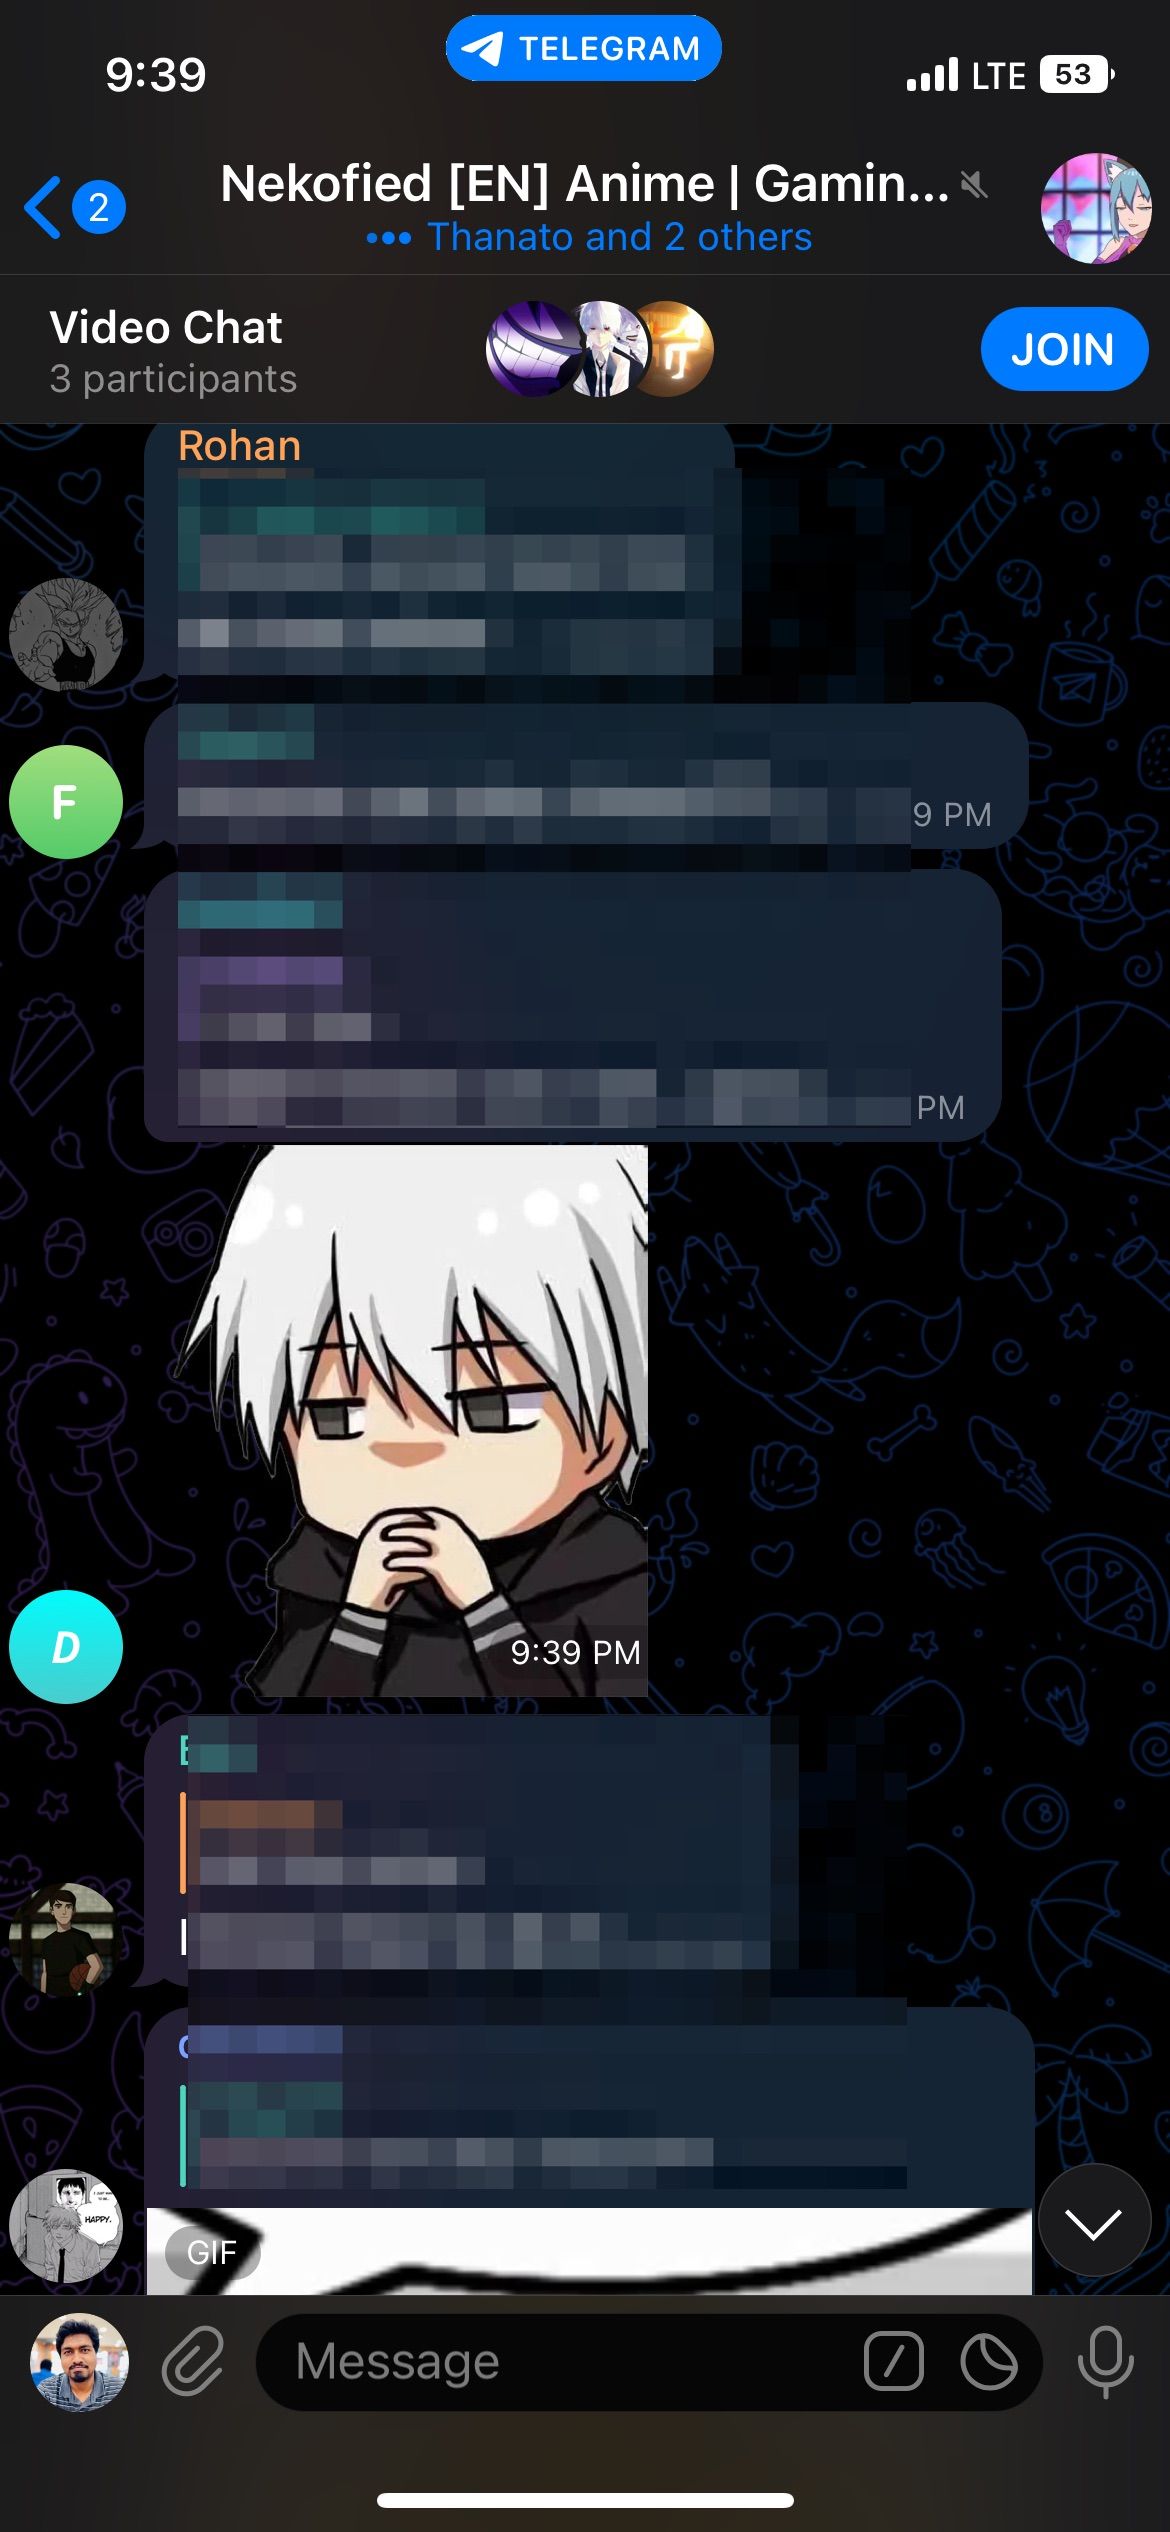 Telegram chat in an Anime community